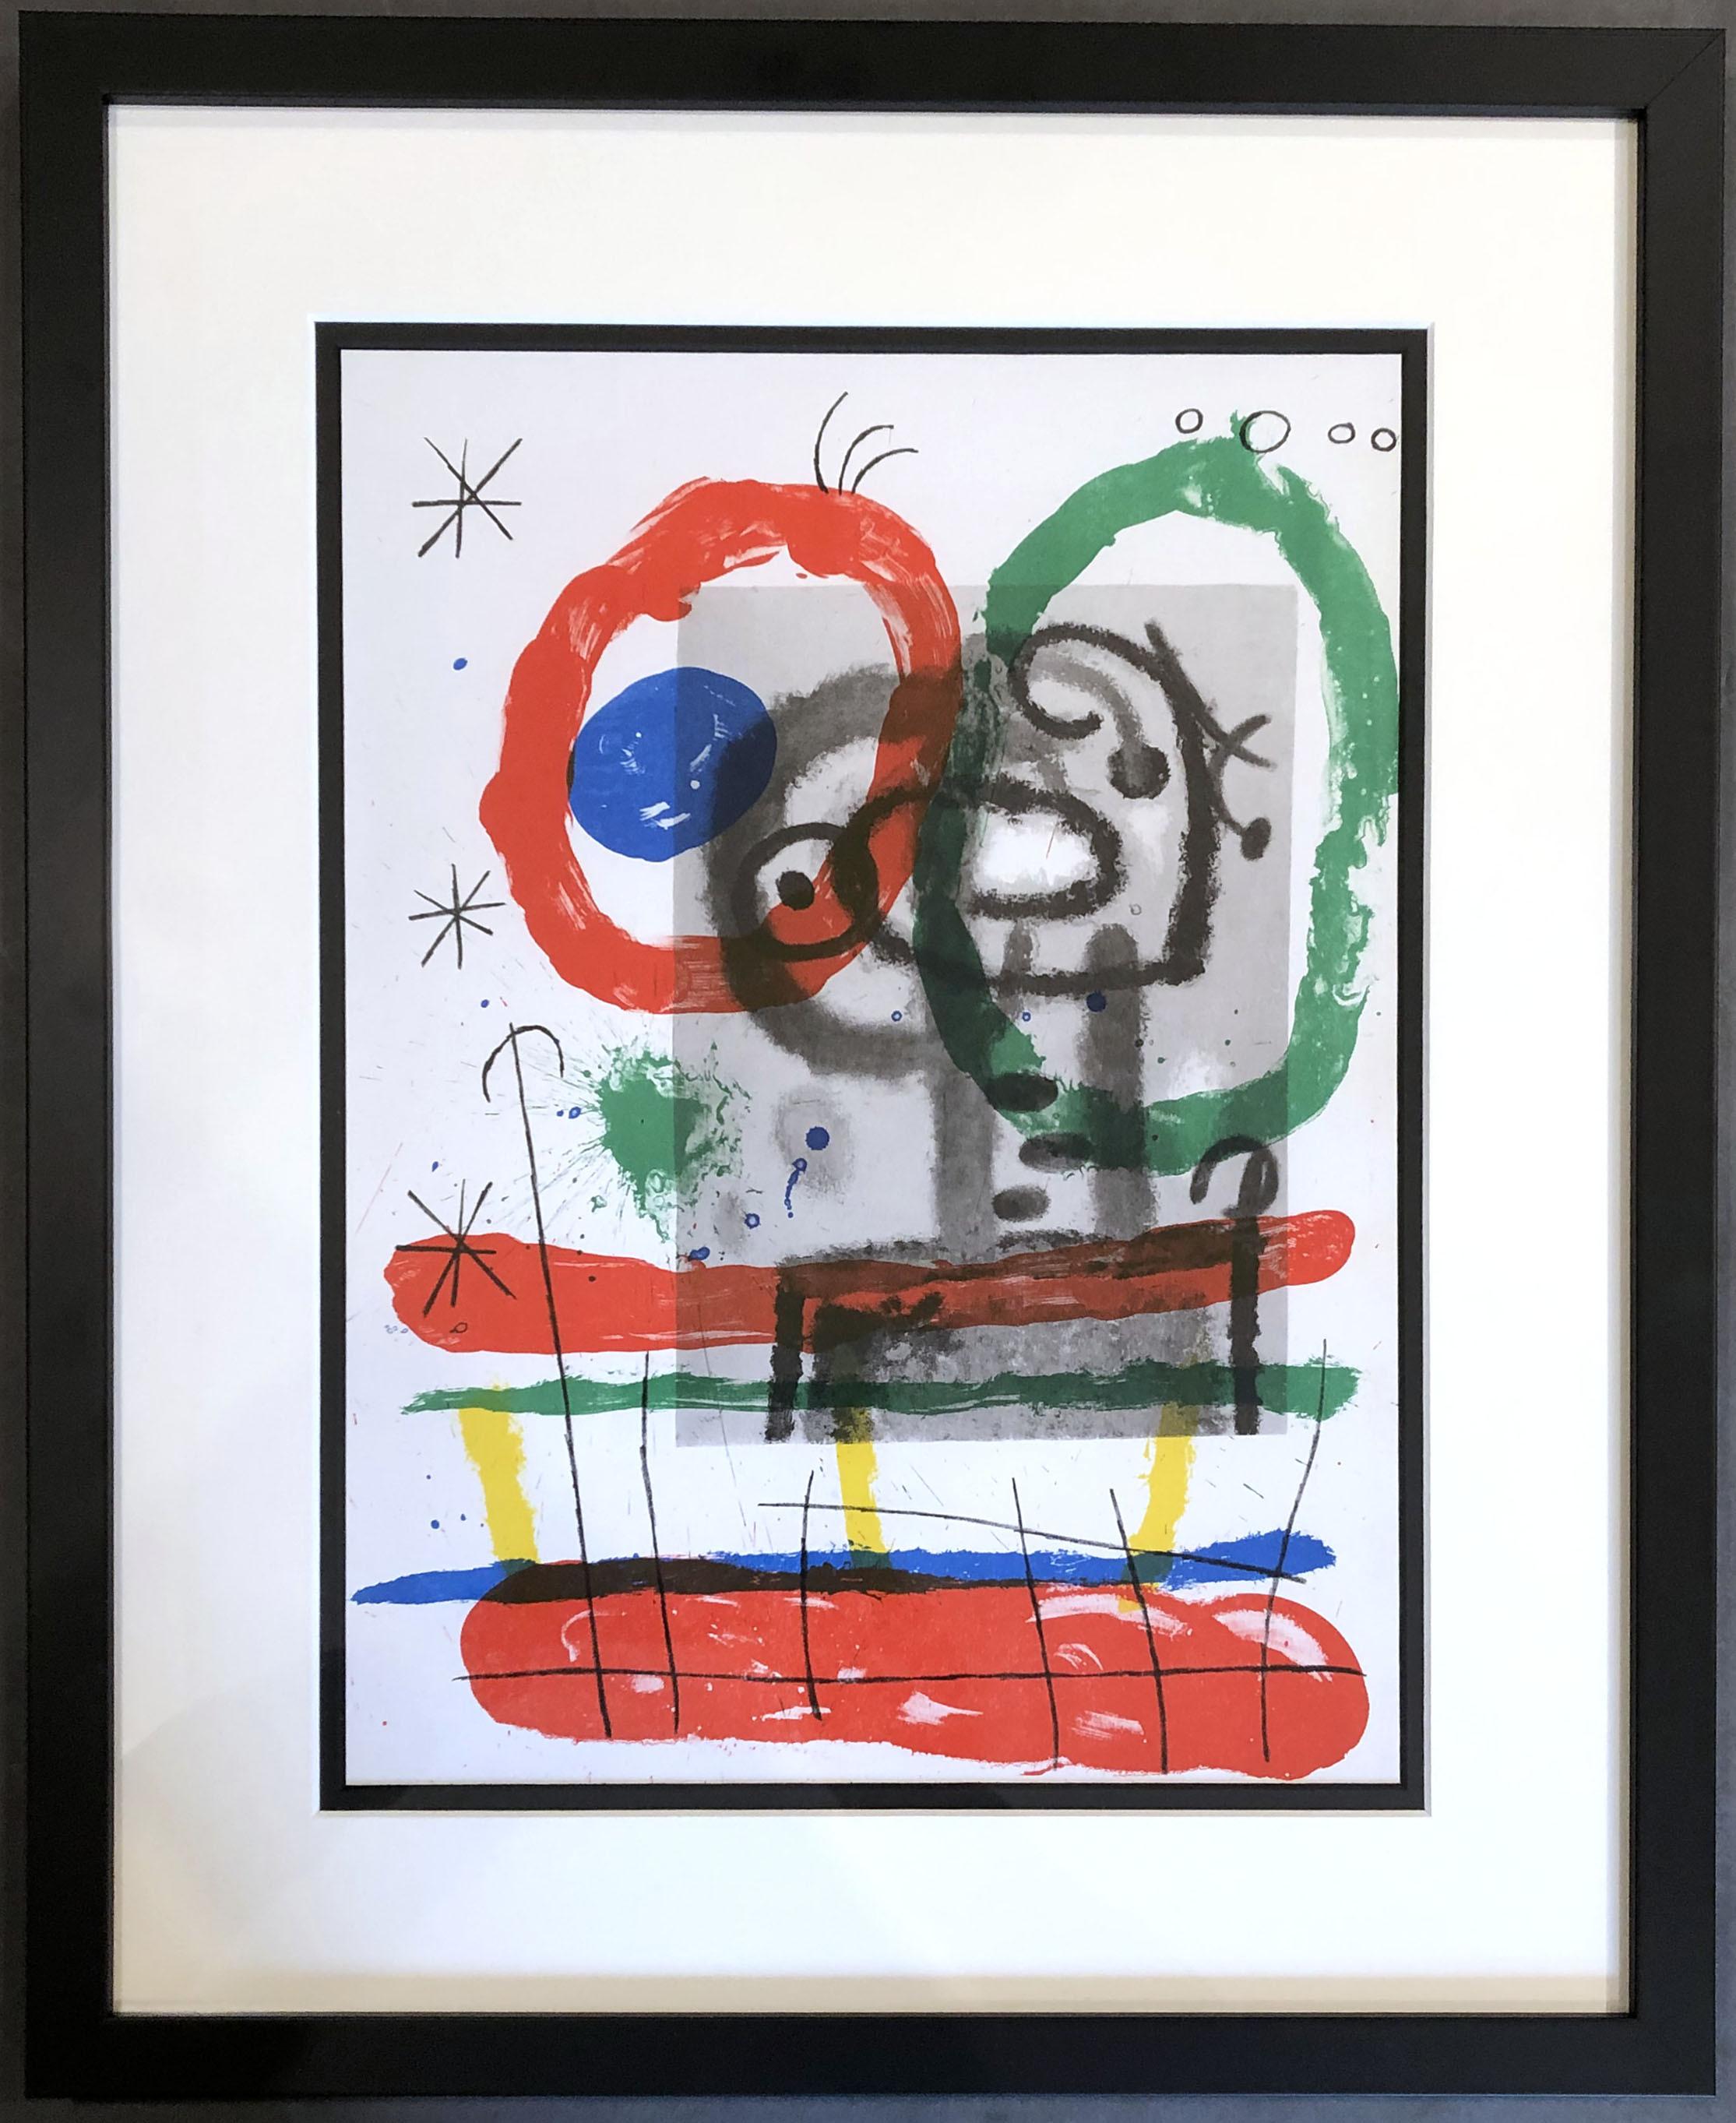 Plate 10, from 1965 Peintures sur Cartons - Print by Joan Miró